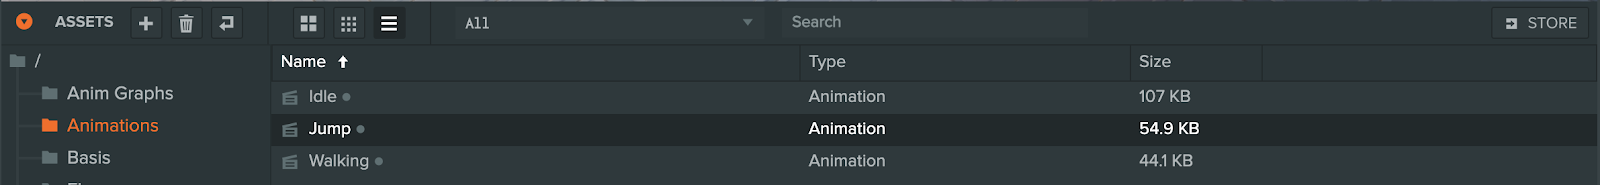 Animation Assets